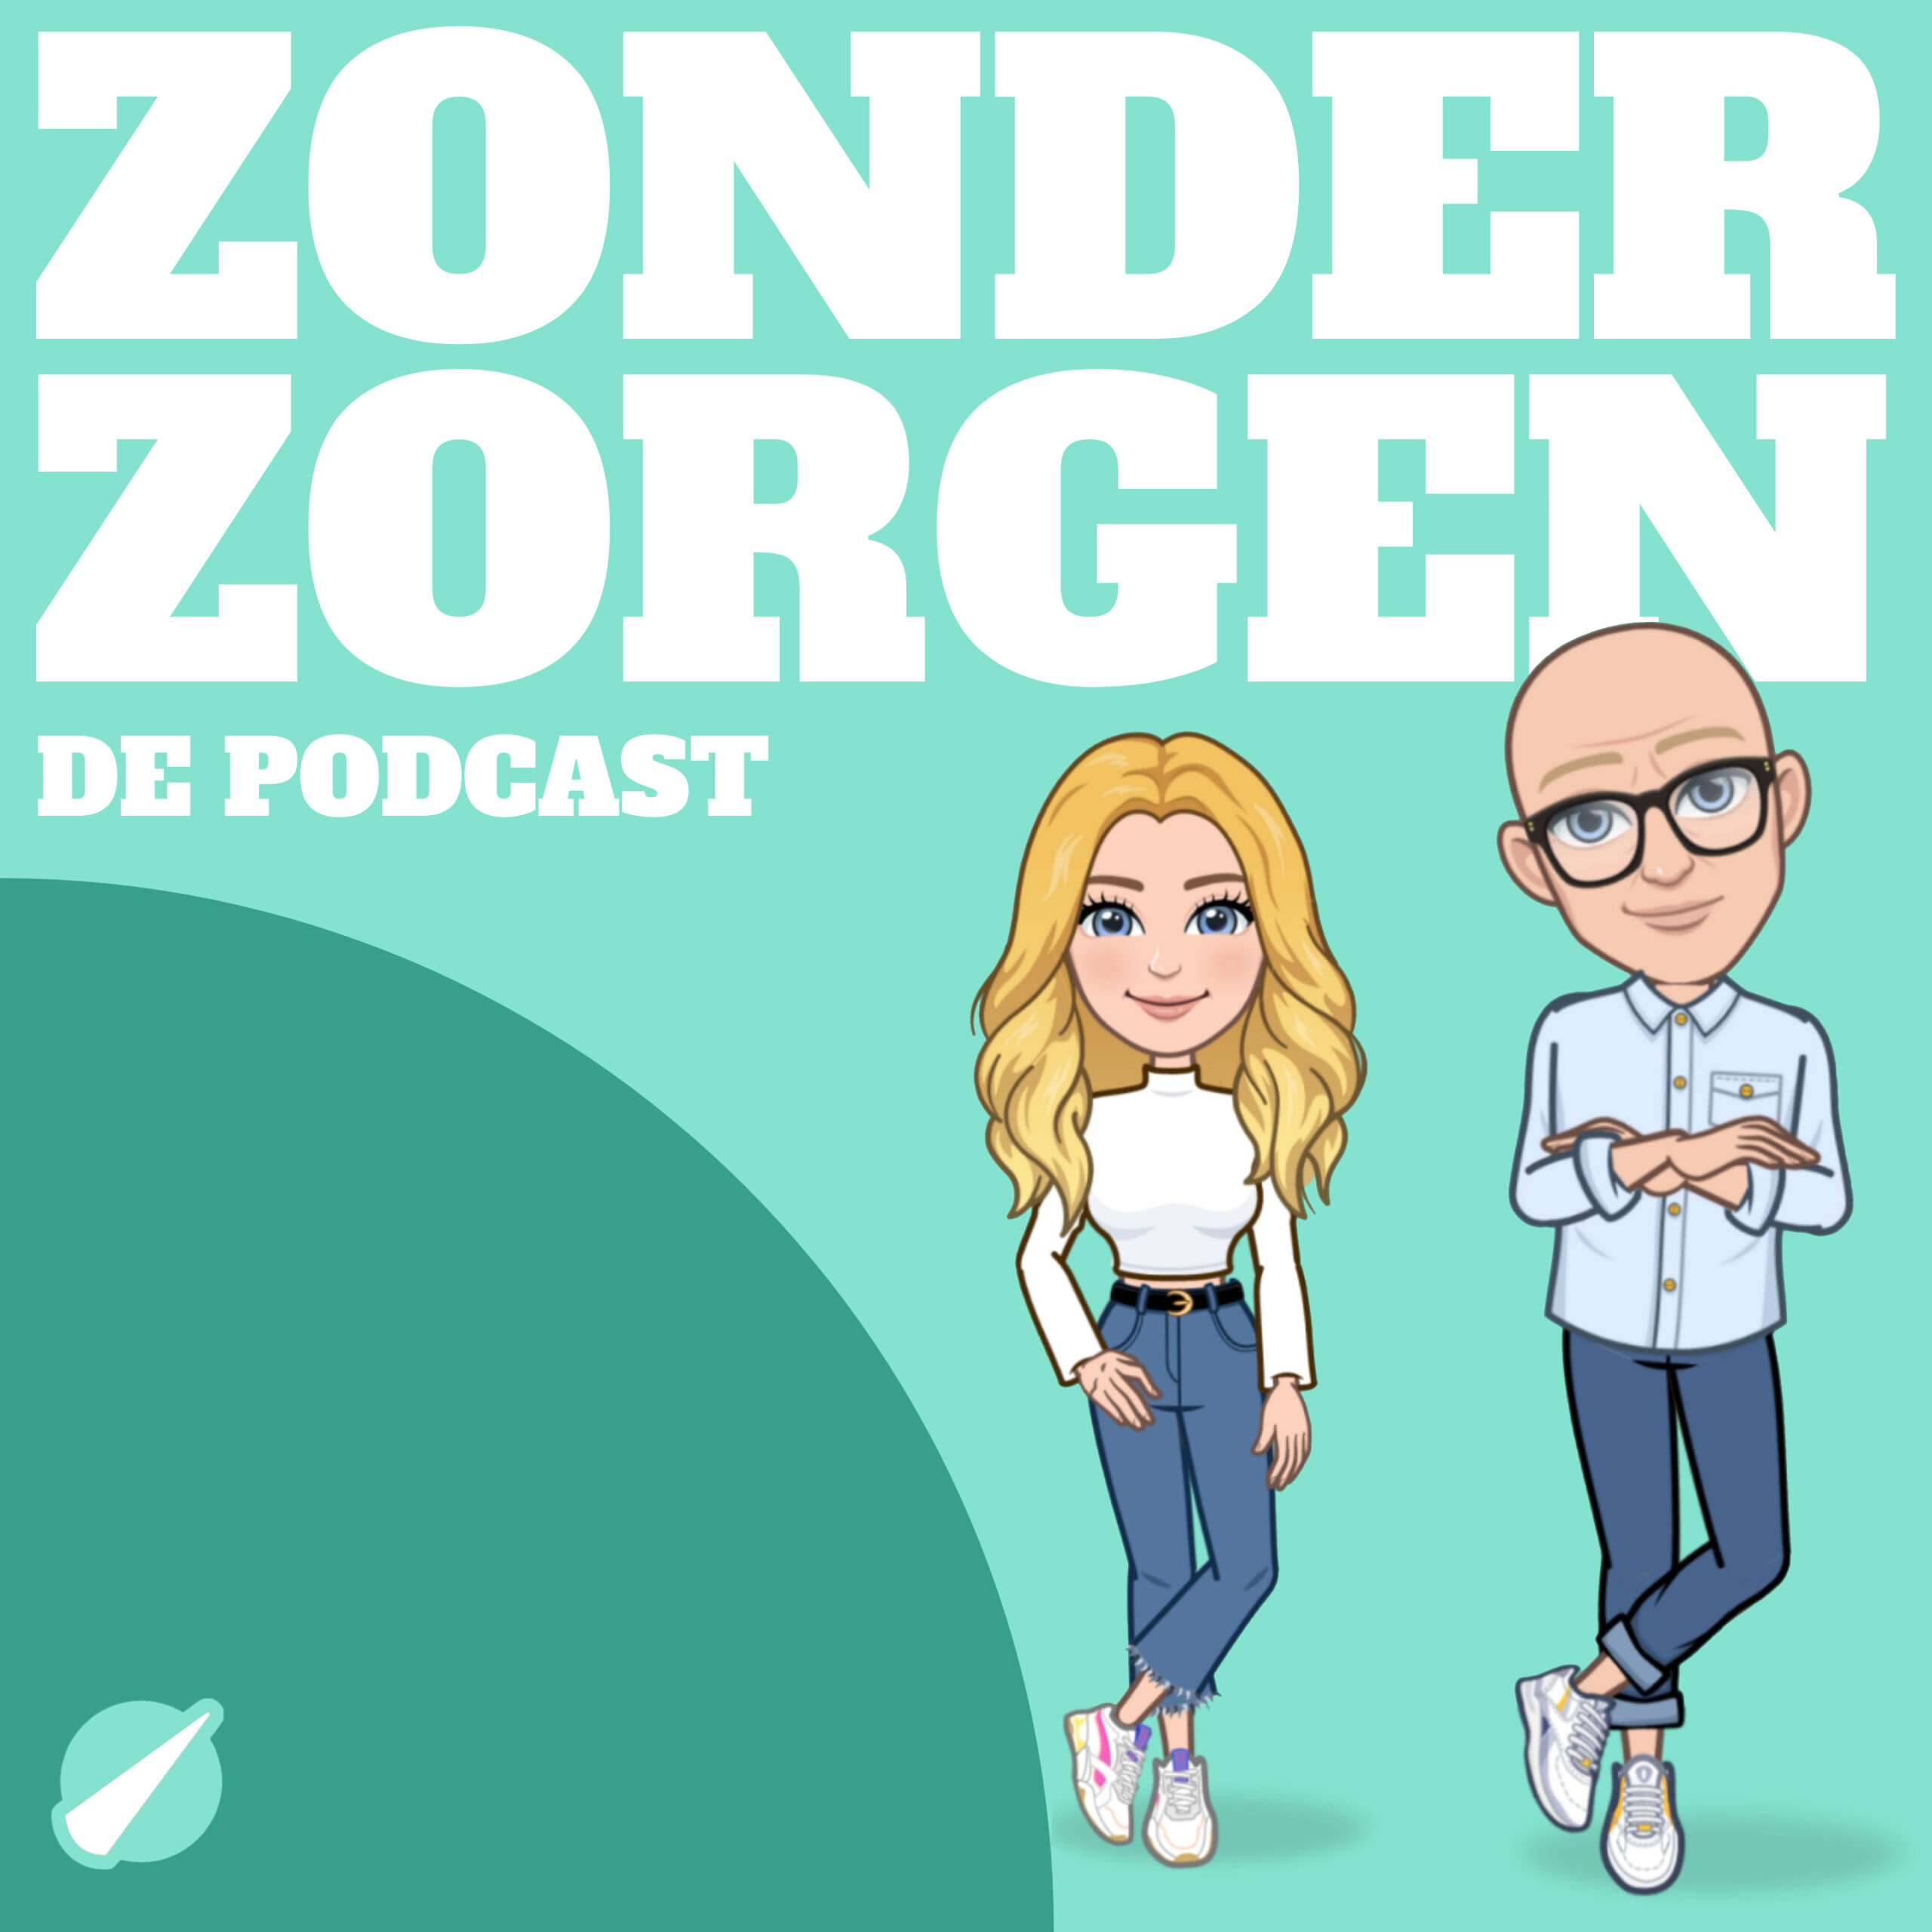 art for podcast Zonder Zorgen de Podcast by Pam Lanters